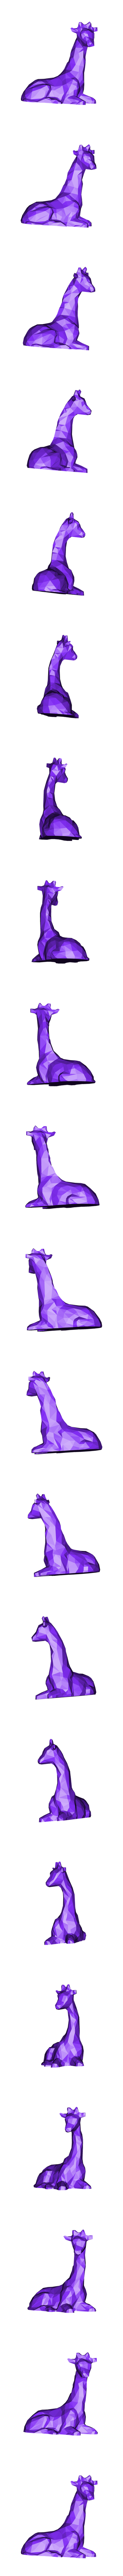 giraffe.stl Download free STL file Low Poly Giraffe • 3D print template, RubixDesign